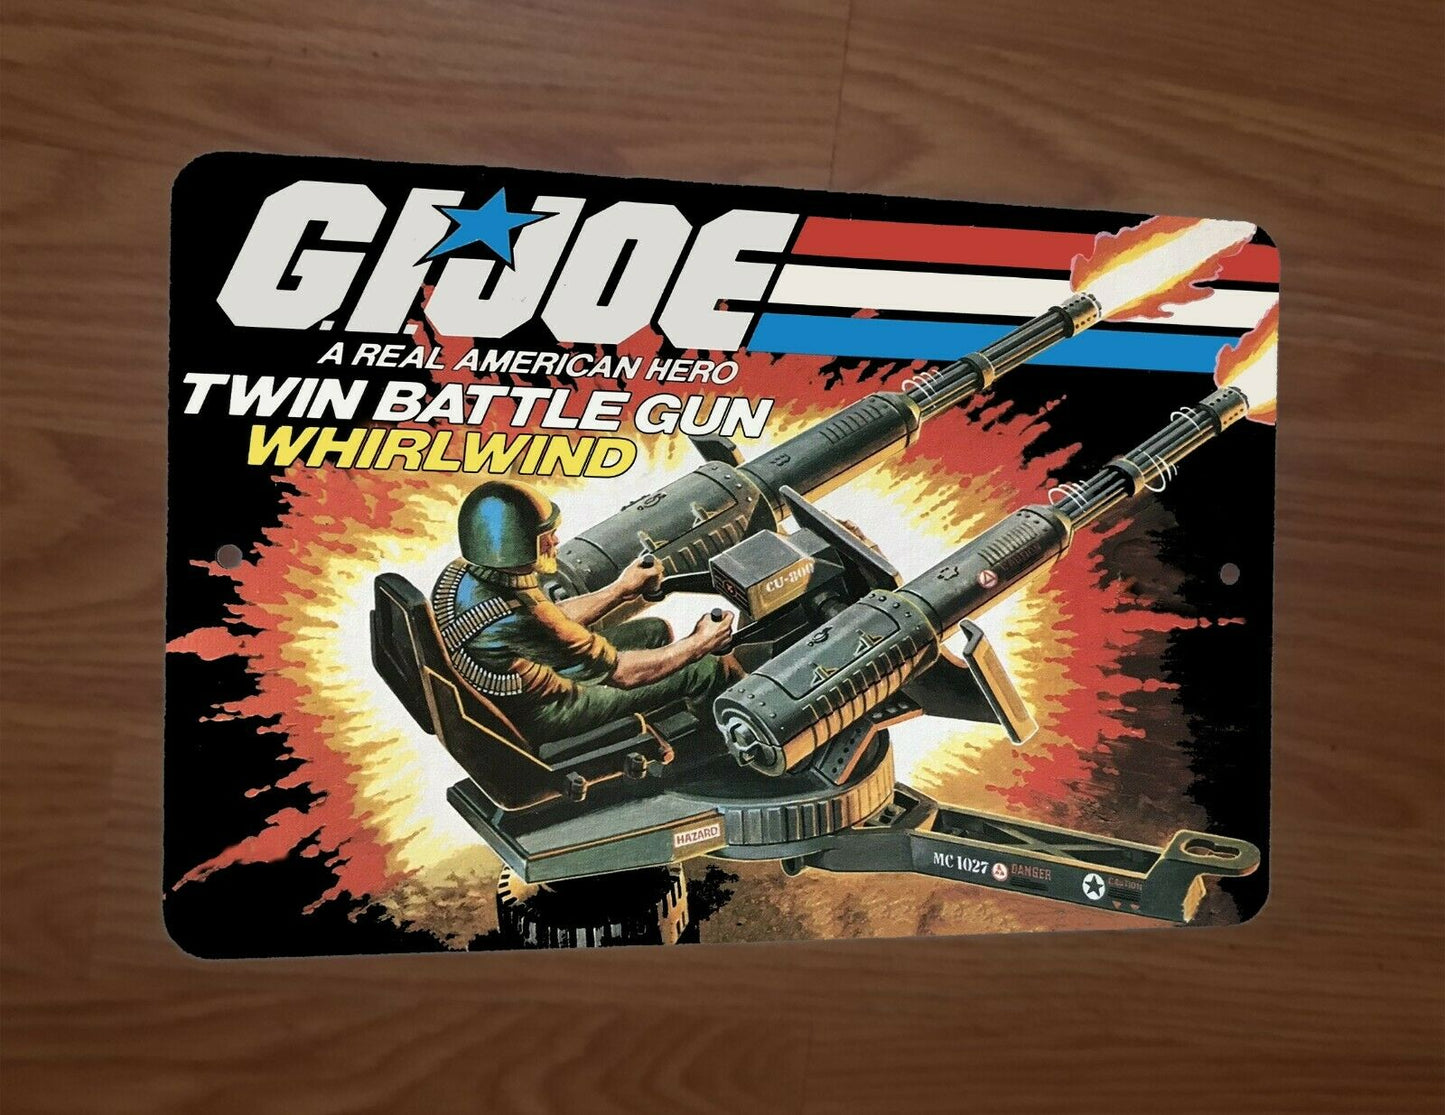 GI Joe Twin Battle Gun Whirlwind Artwork 8x12 Metal Wall Sign Retro 80s Cartoon